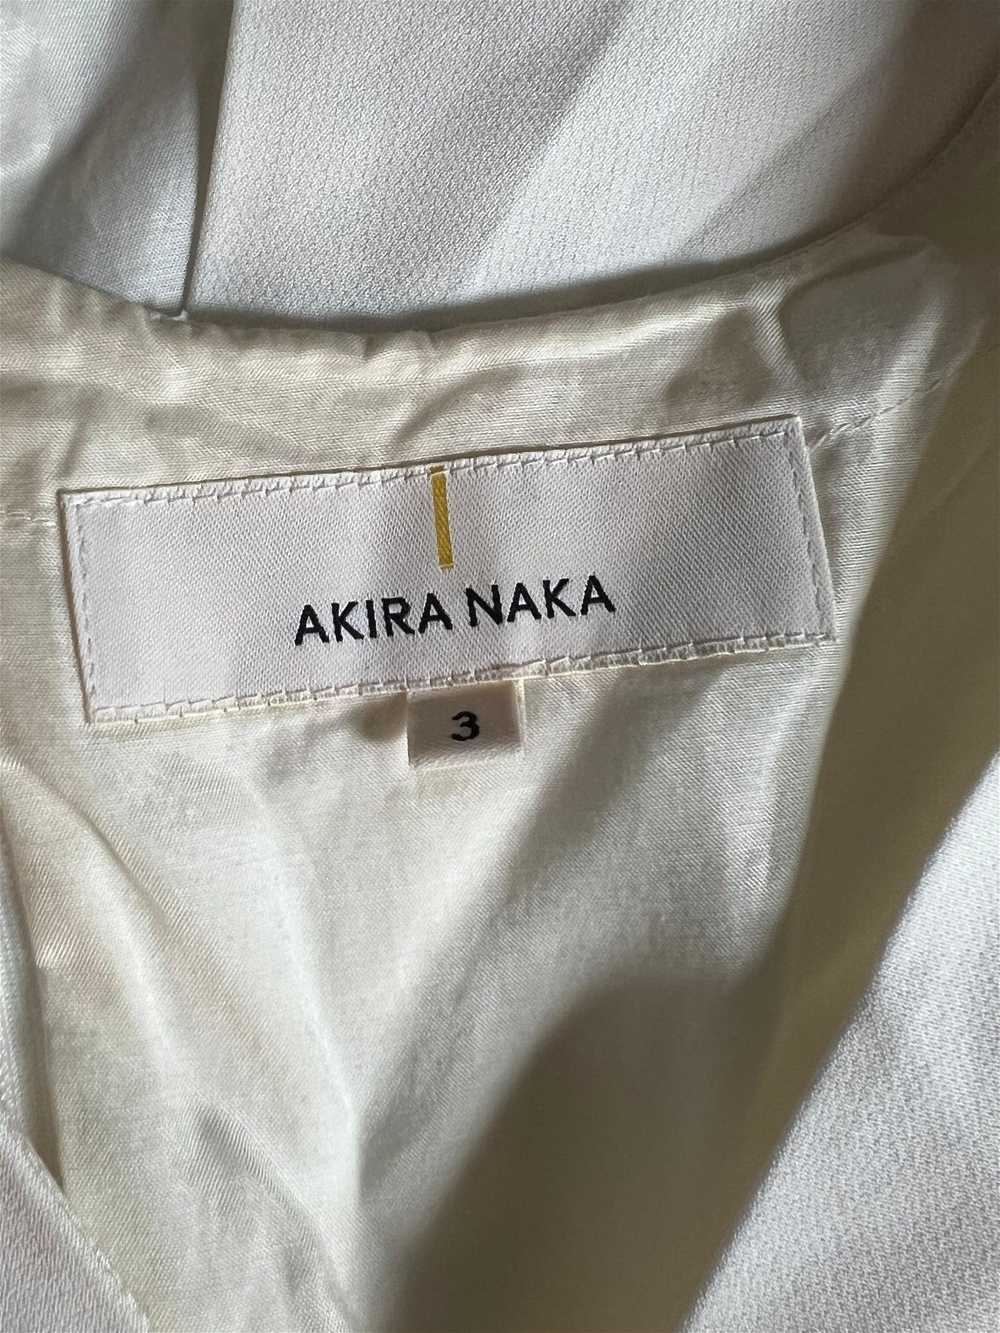 Akira Naka White Top Blouse, Size 3 - image 2